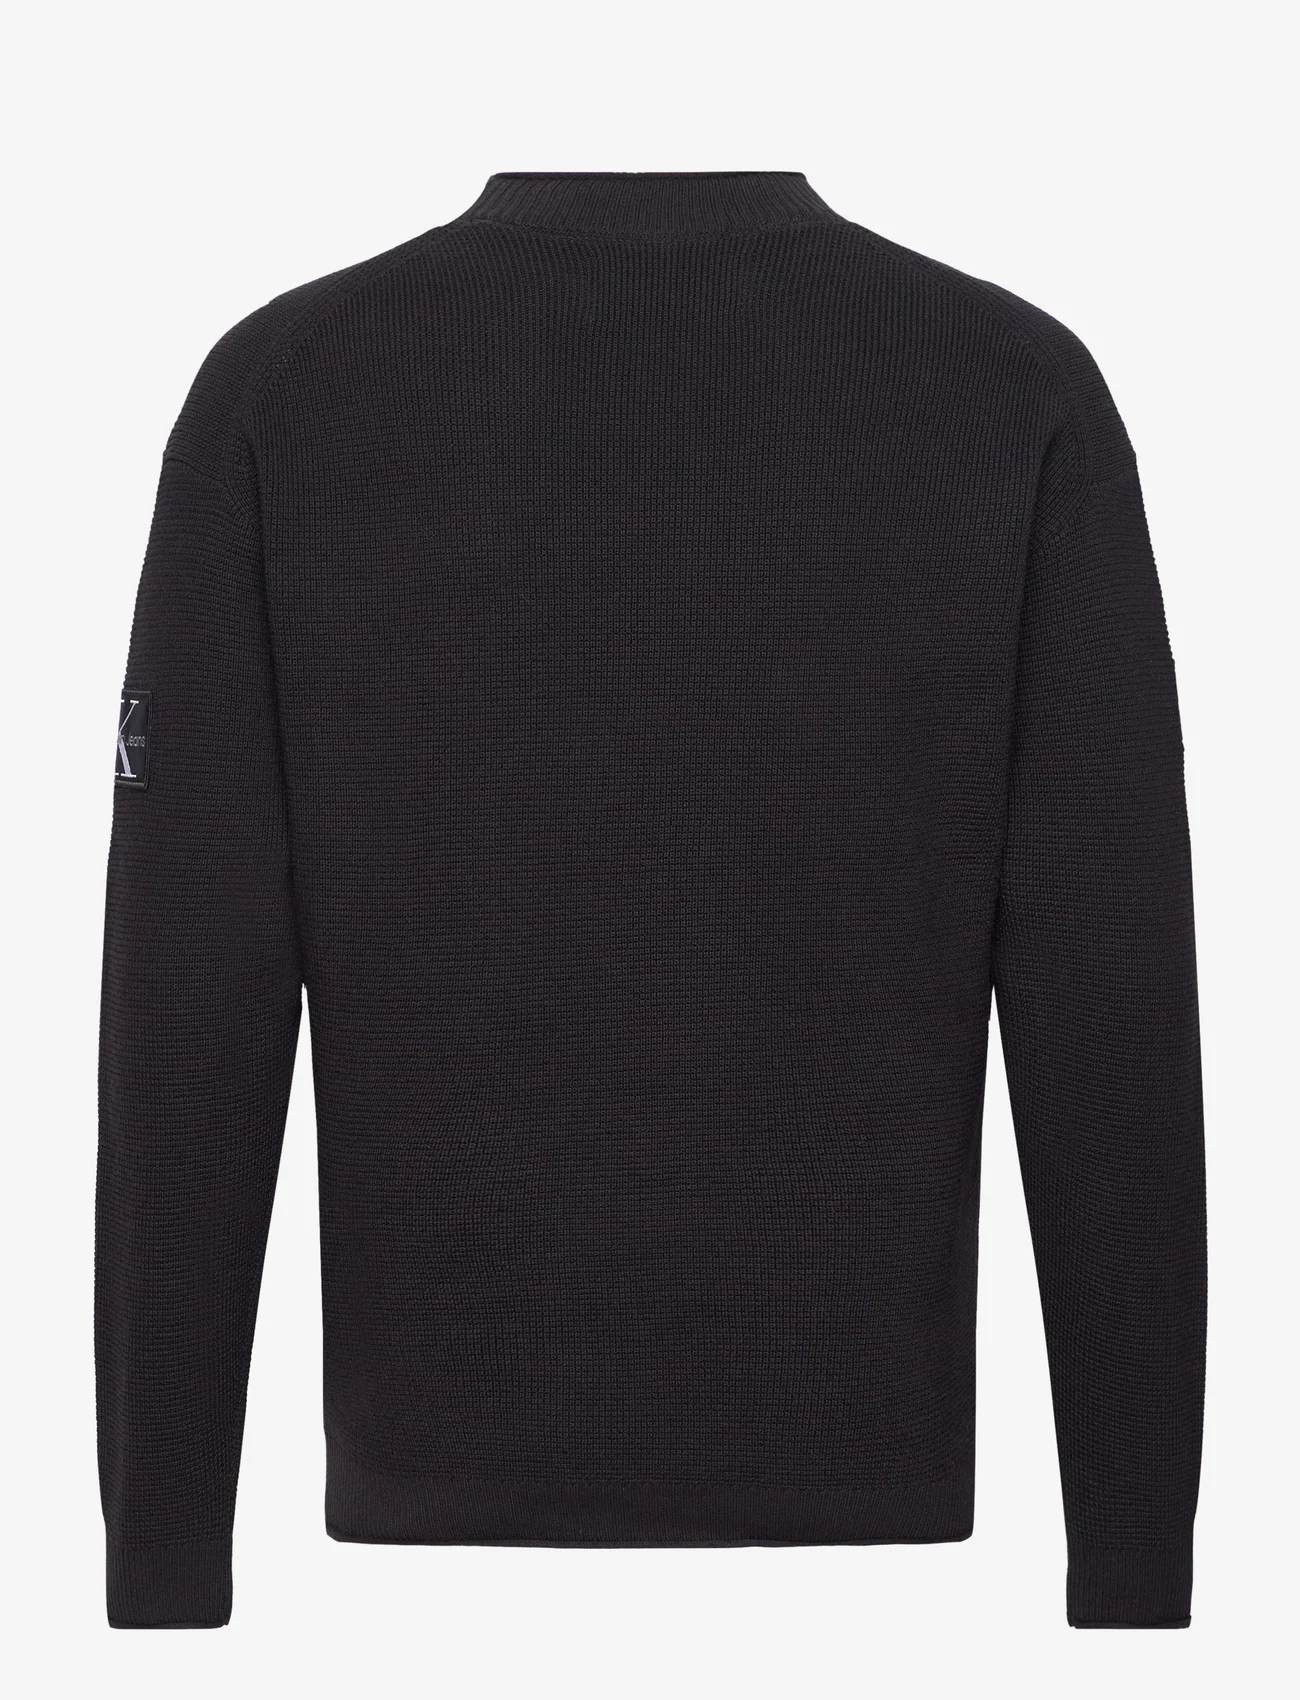 Calvin Klein Jeans - BADGE RELAXED SWEATER - okrągły dekolt - ck black - 1